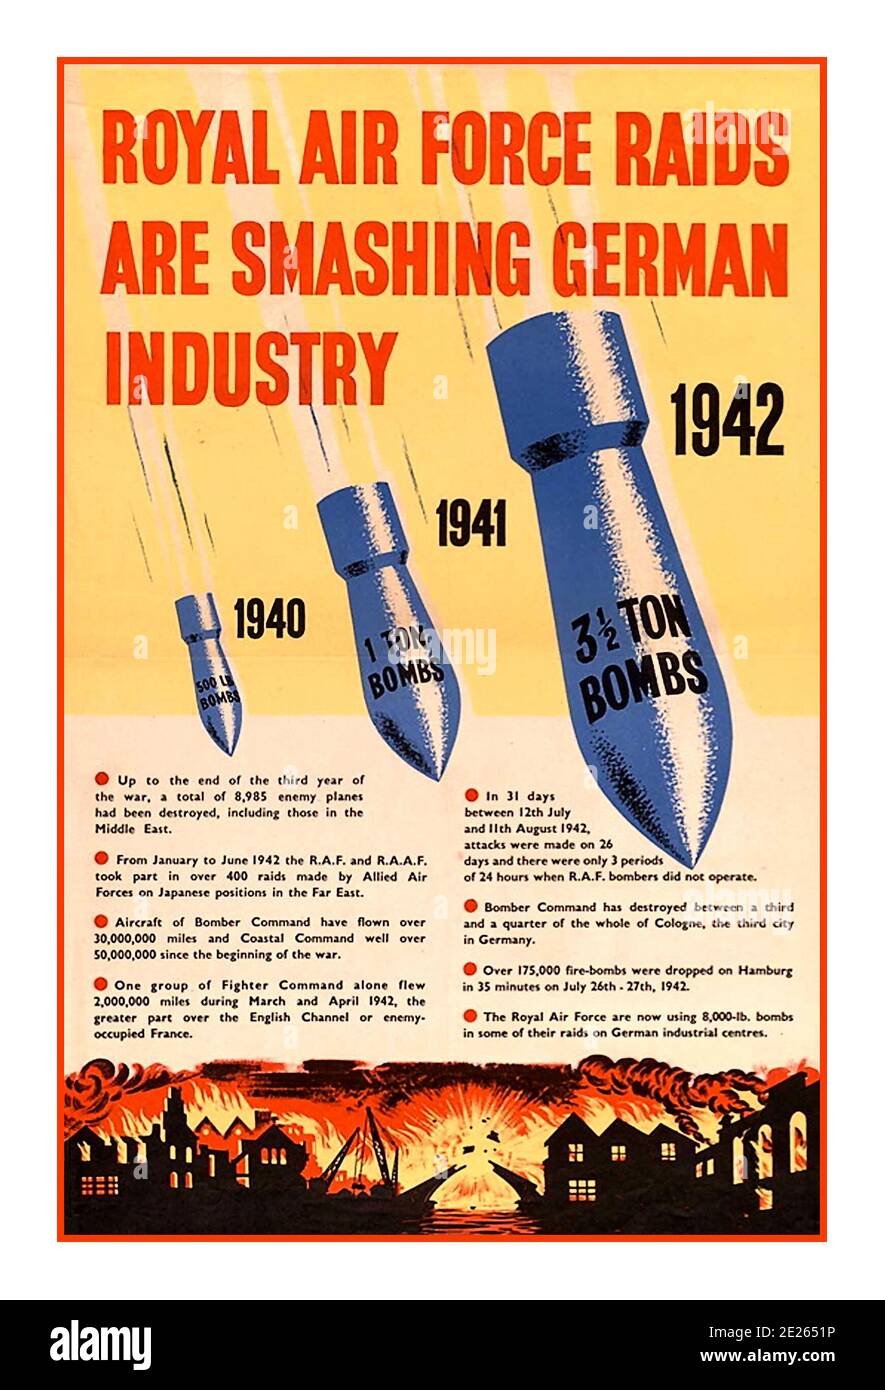 1940's WW2 British Propaganda poster 'Royal Air Force Raids are Smashing German Industry' World War II Second World War Bomber Command RAF 1940 1941 1942 increasing bomb tonnage year on year Stock Photo